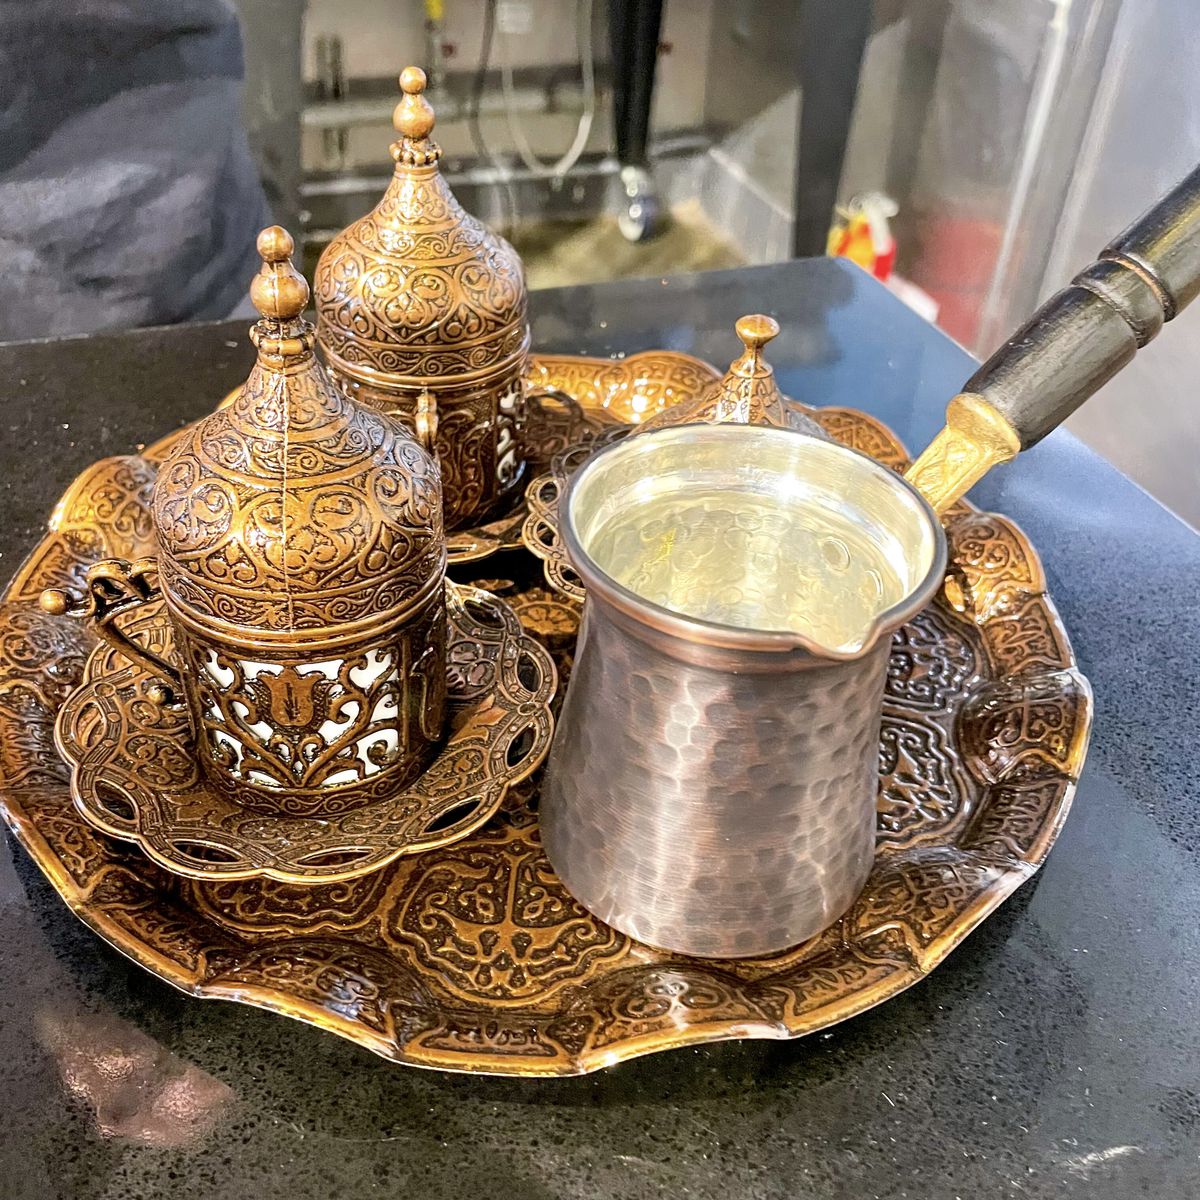 A Turkish coffee set.